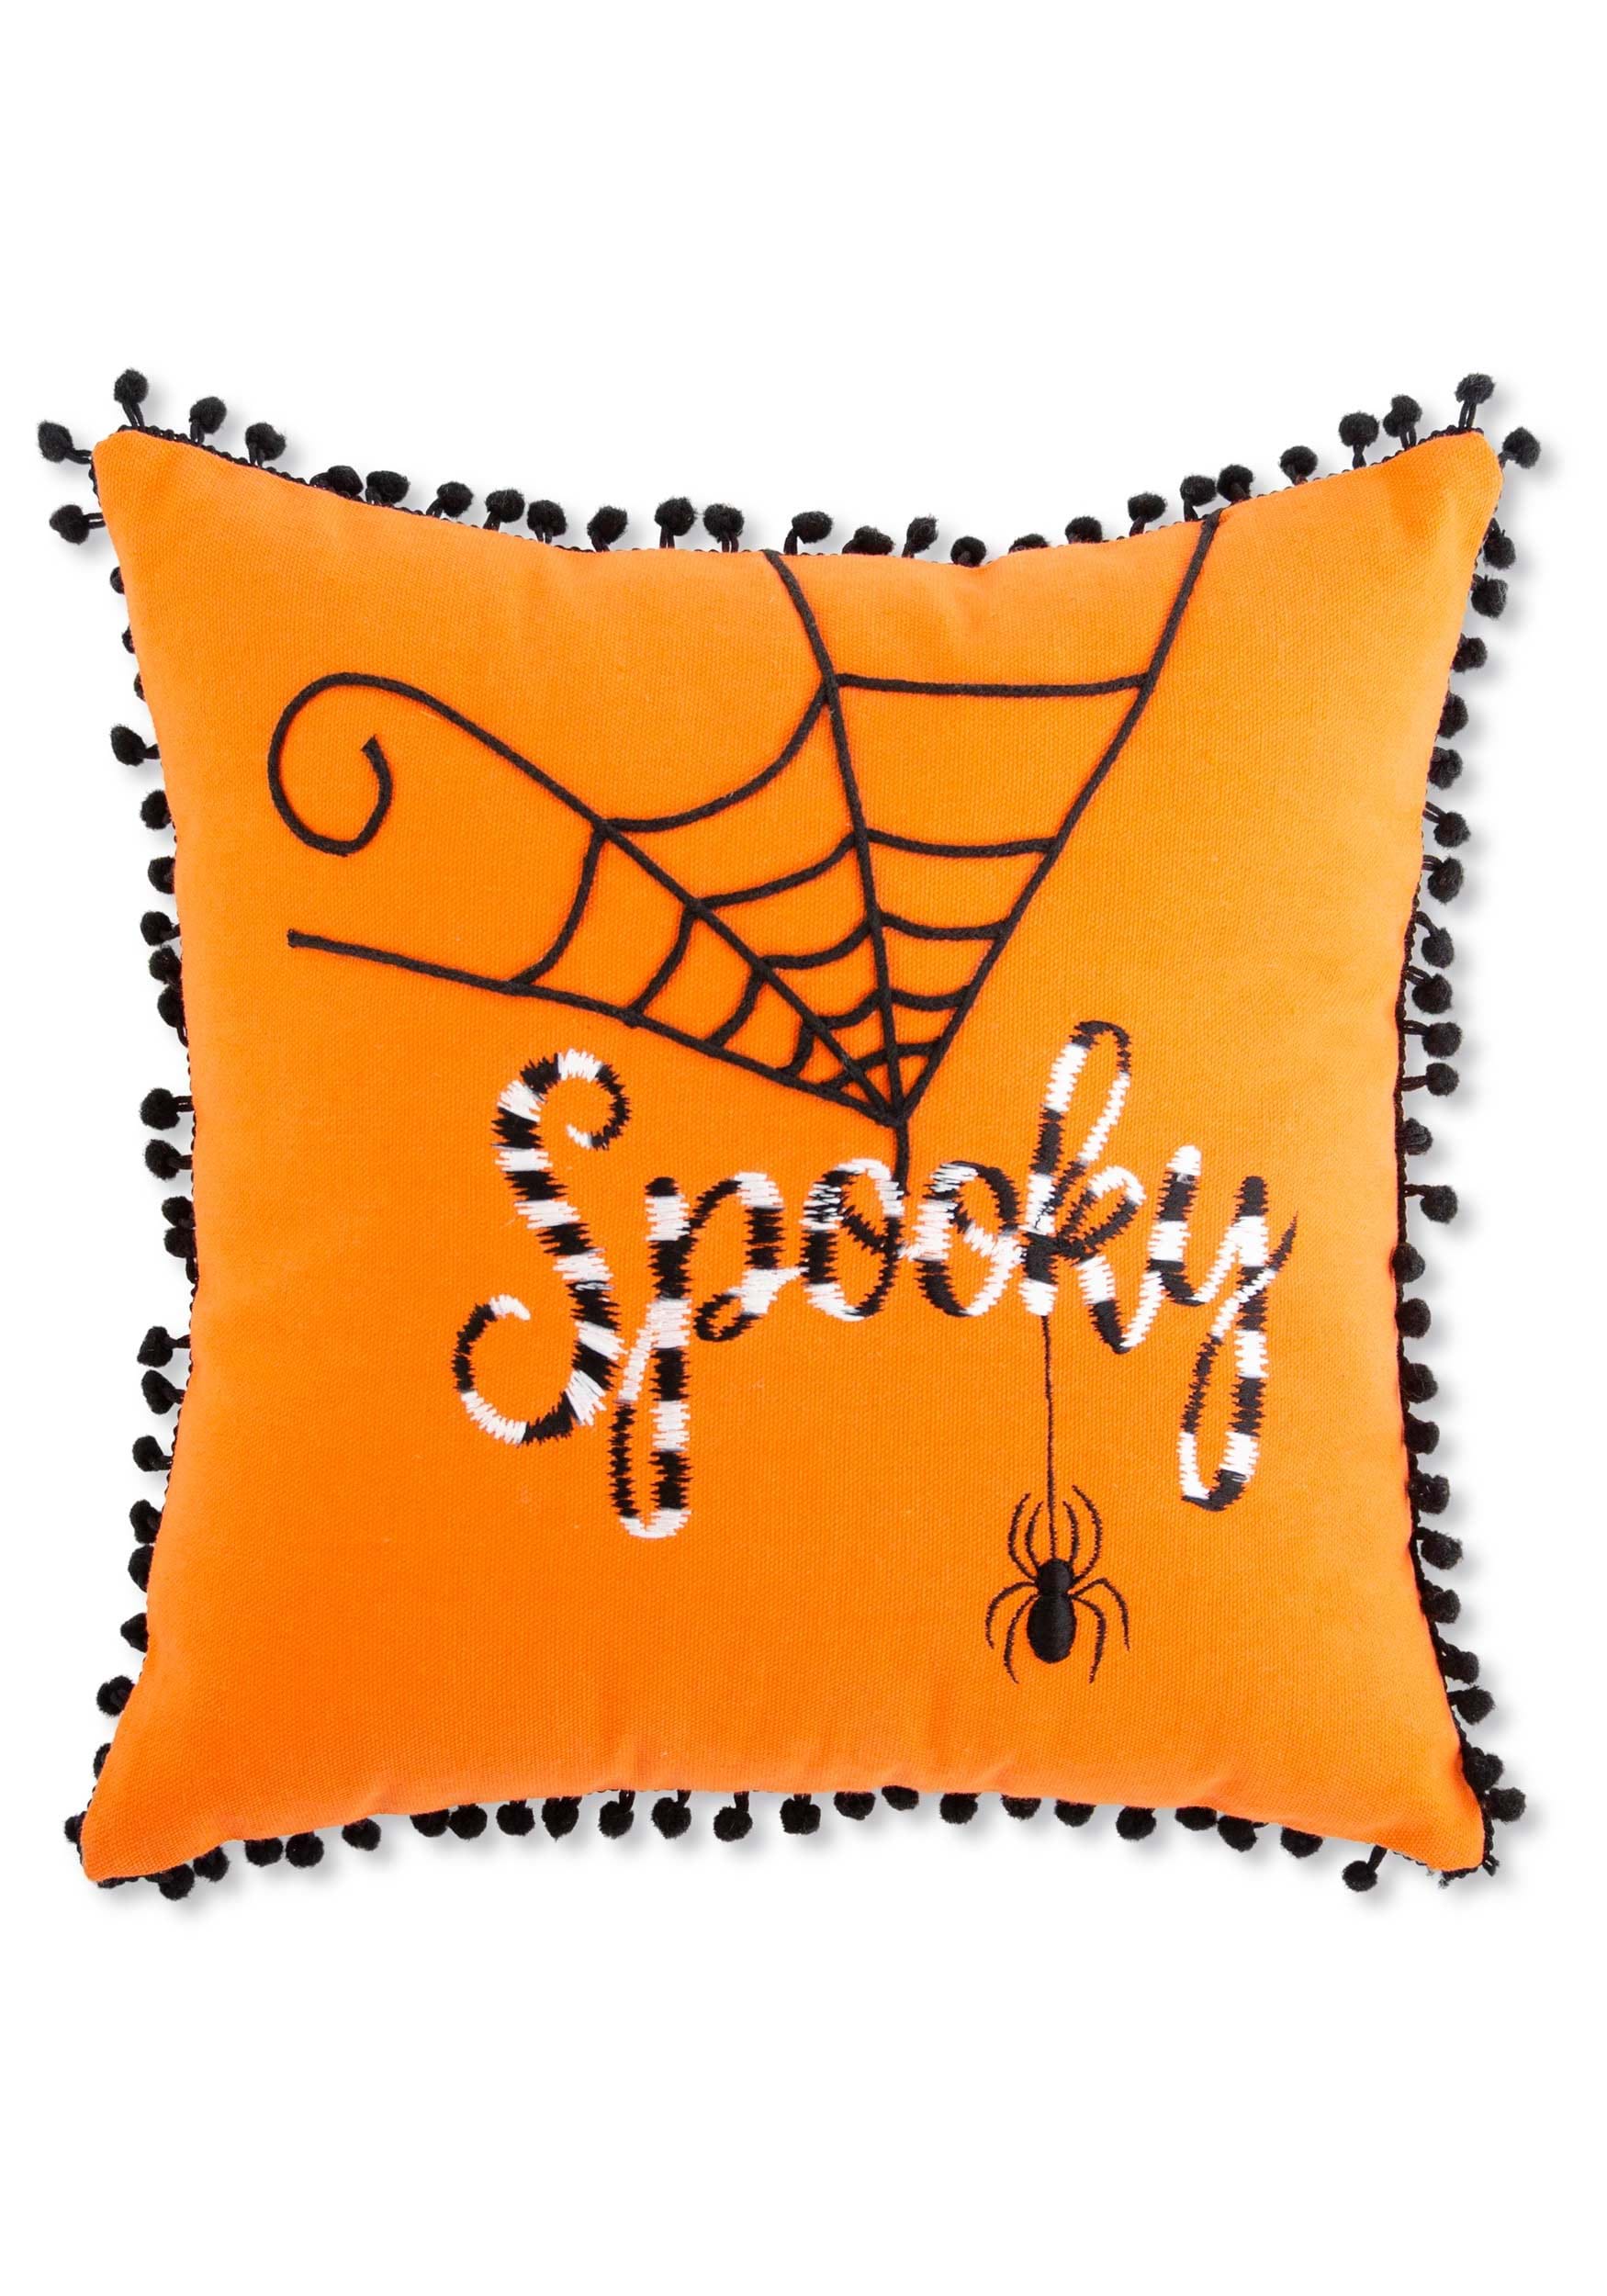 12 Orange Halloween Pillow W/ Black And White Embroidery